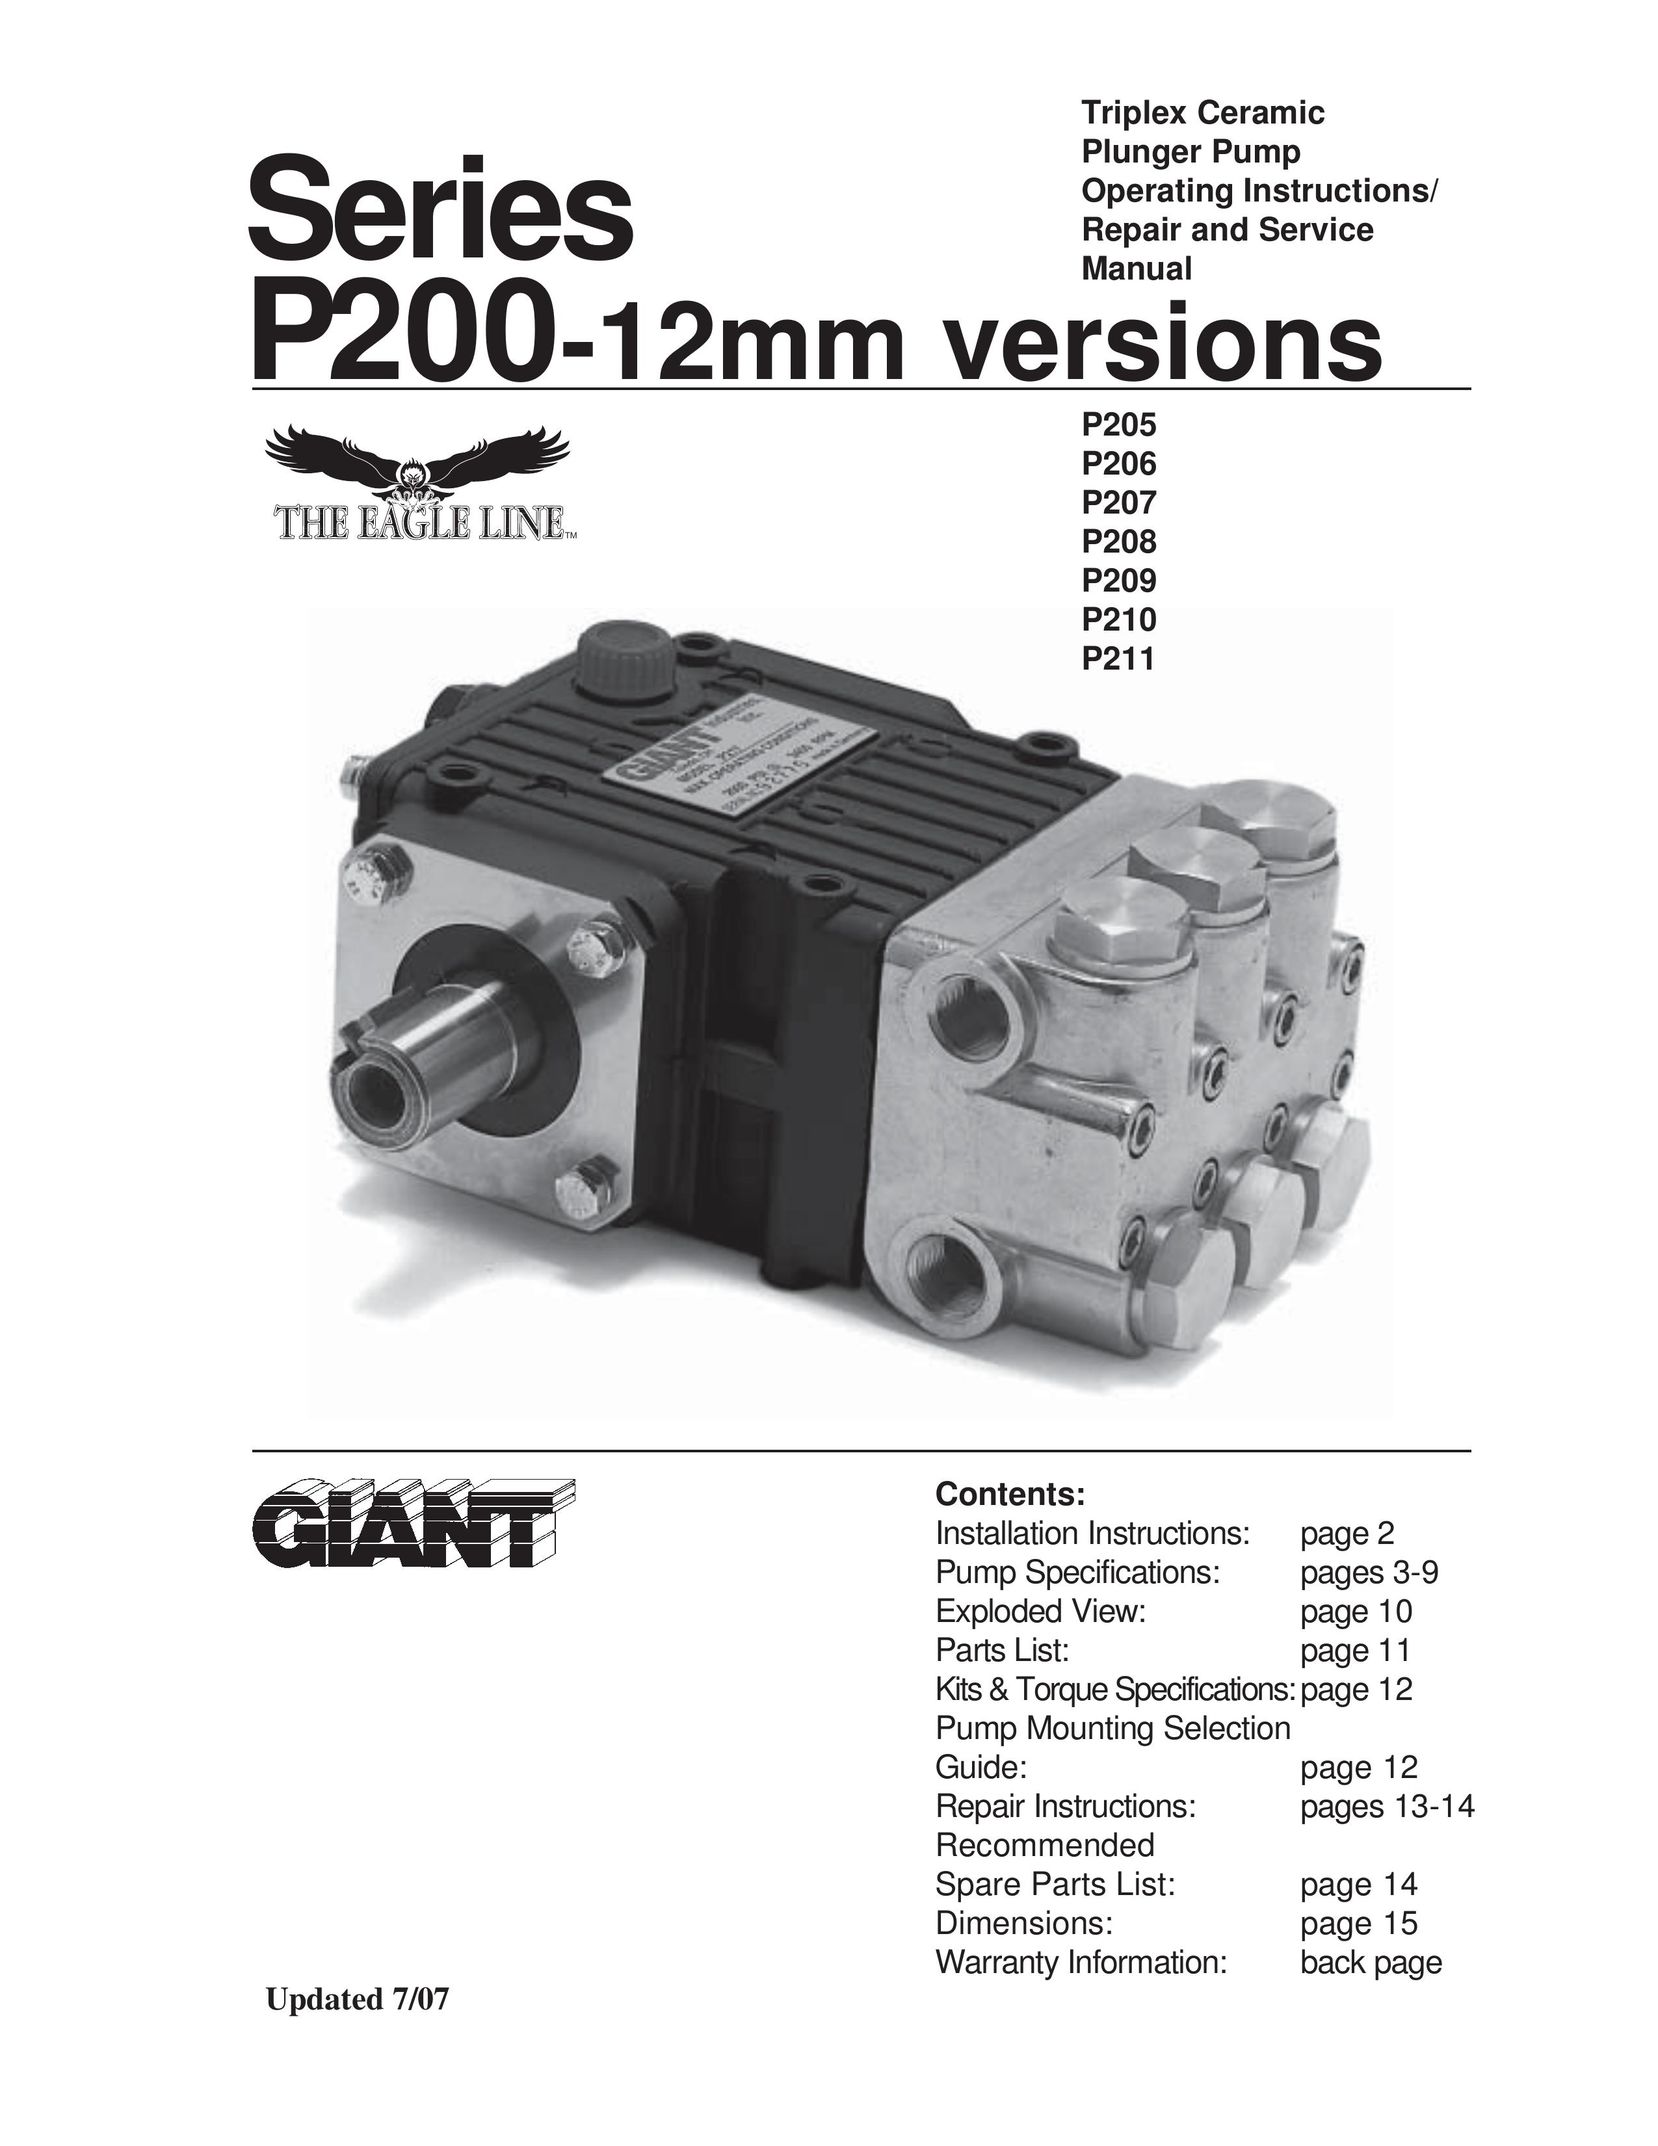 Giant P208 Heat Pump User Manual